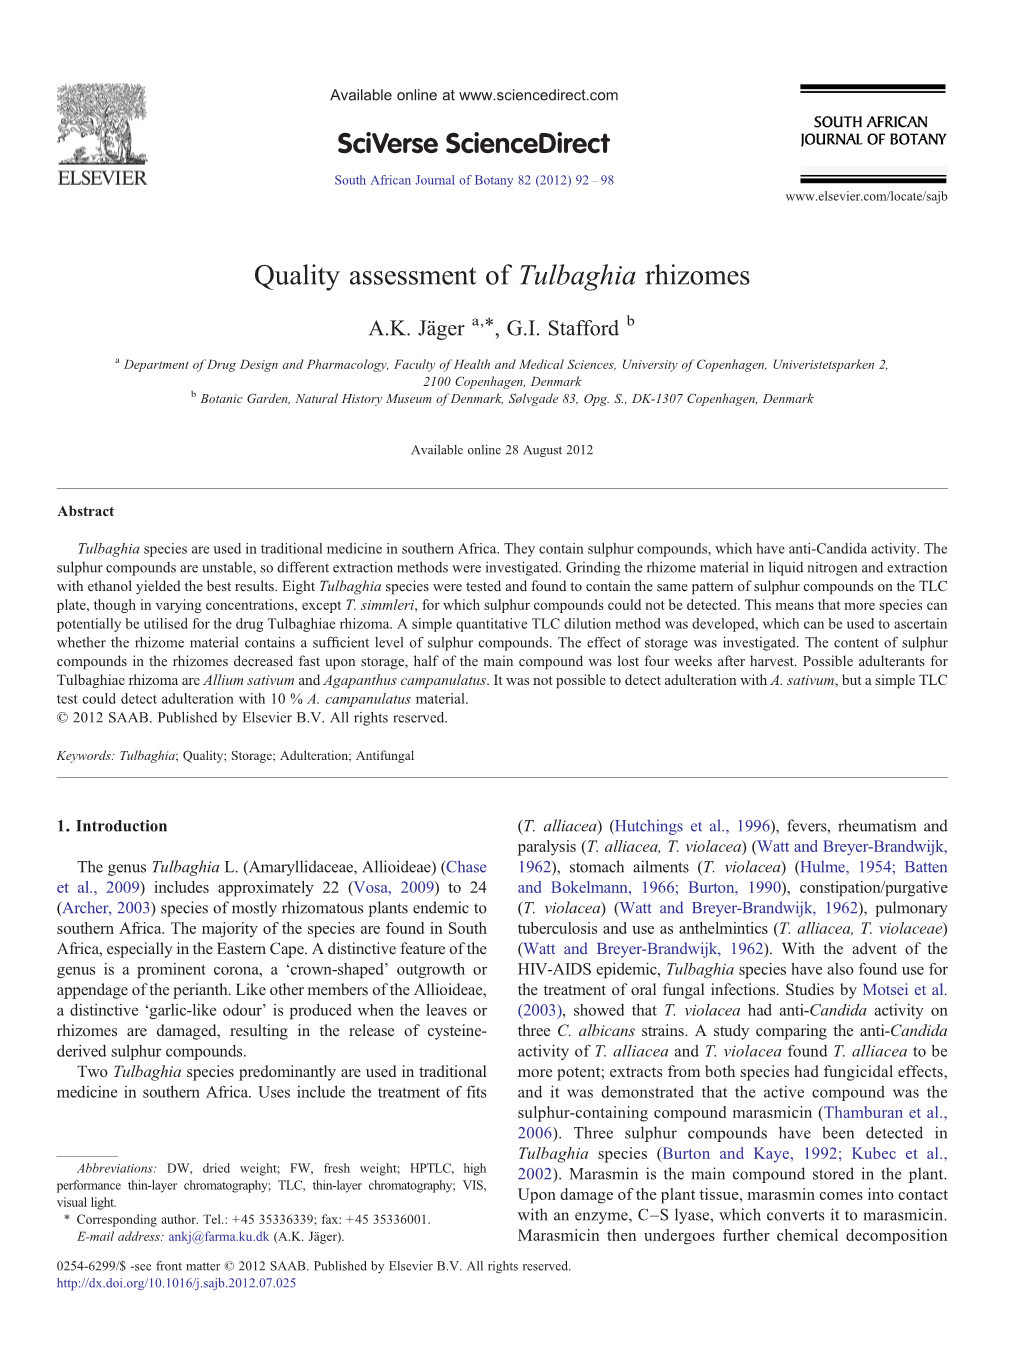 Quality Assessment of Tulbaghia Rhizomes ⁎ A.K